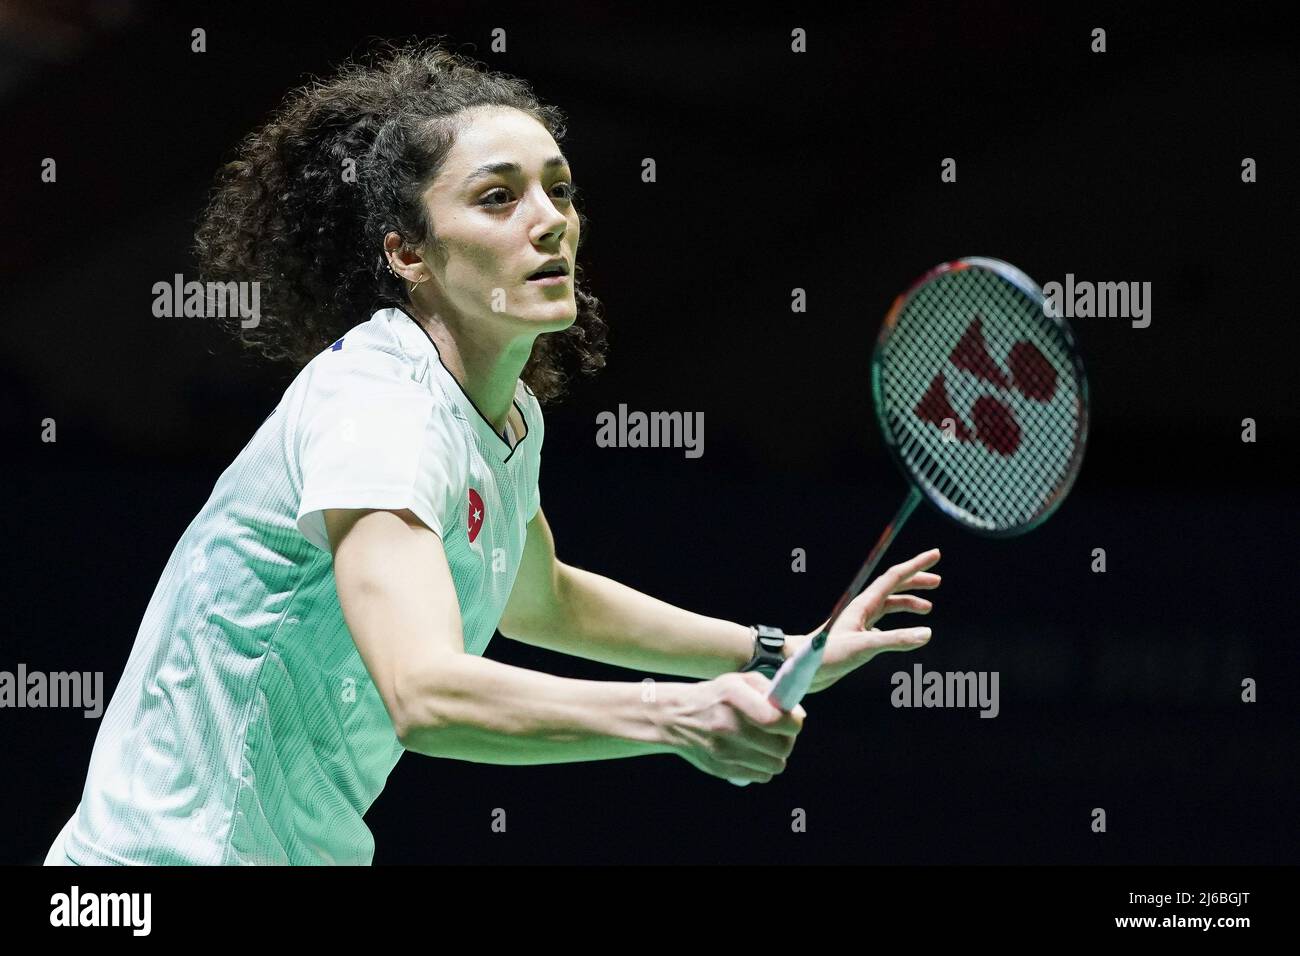 Neslihan Yigit of Turkey seen in action during the European Badminton Championships semi finals against Carolina Marin of Spain